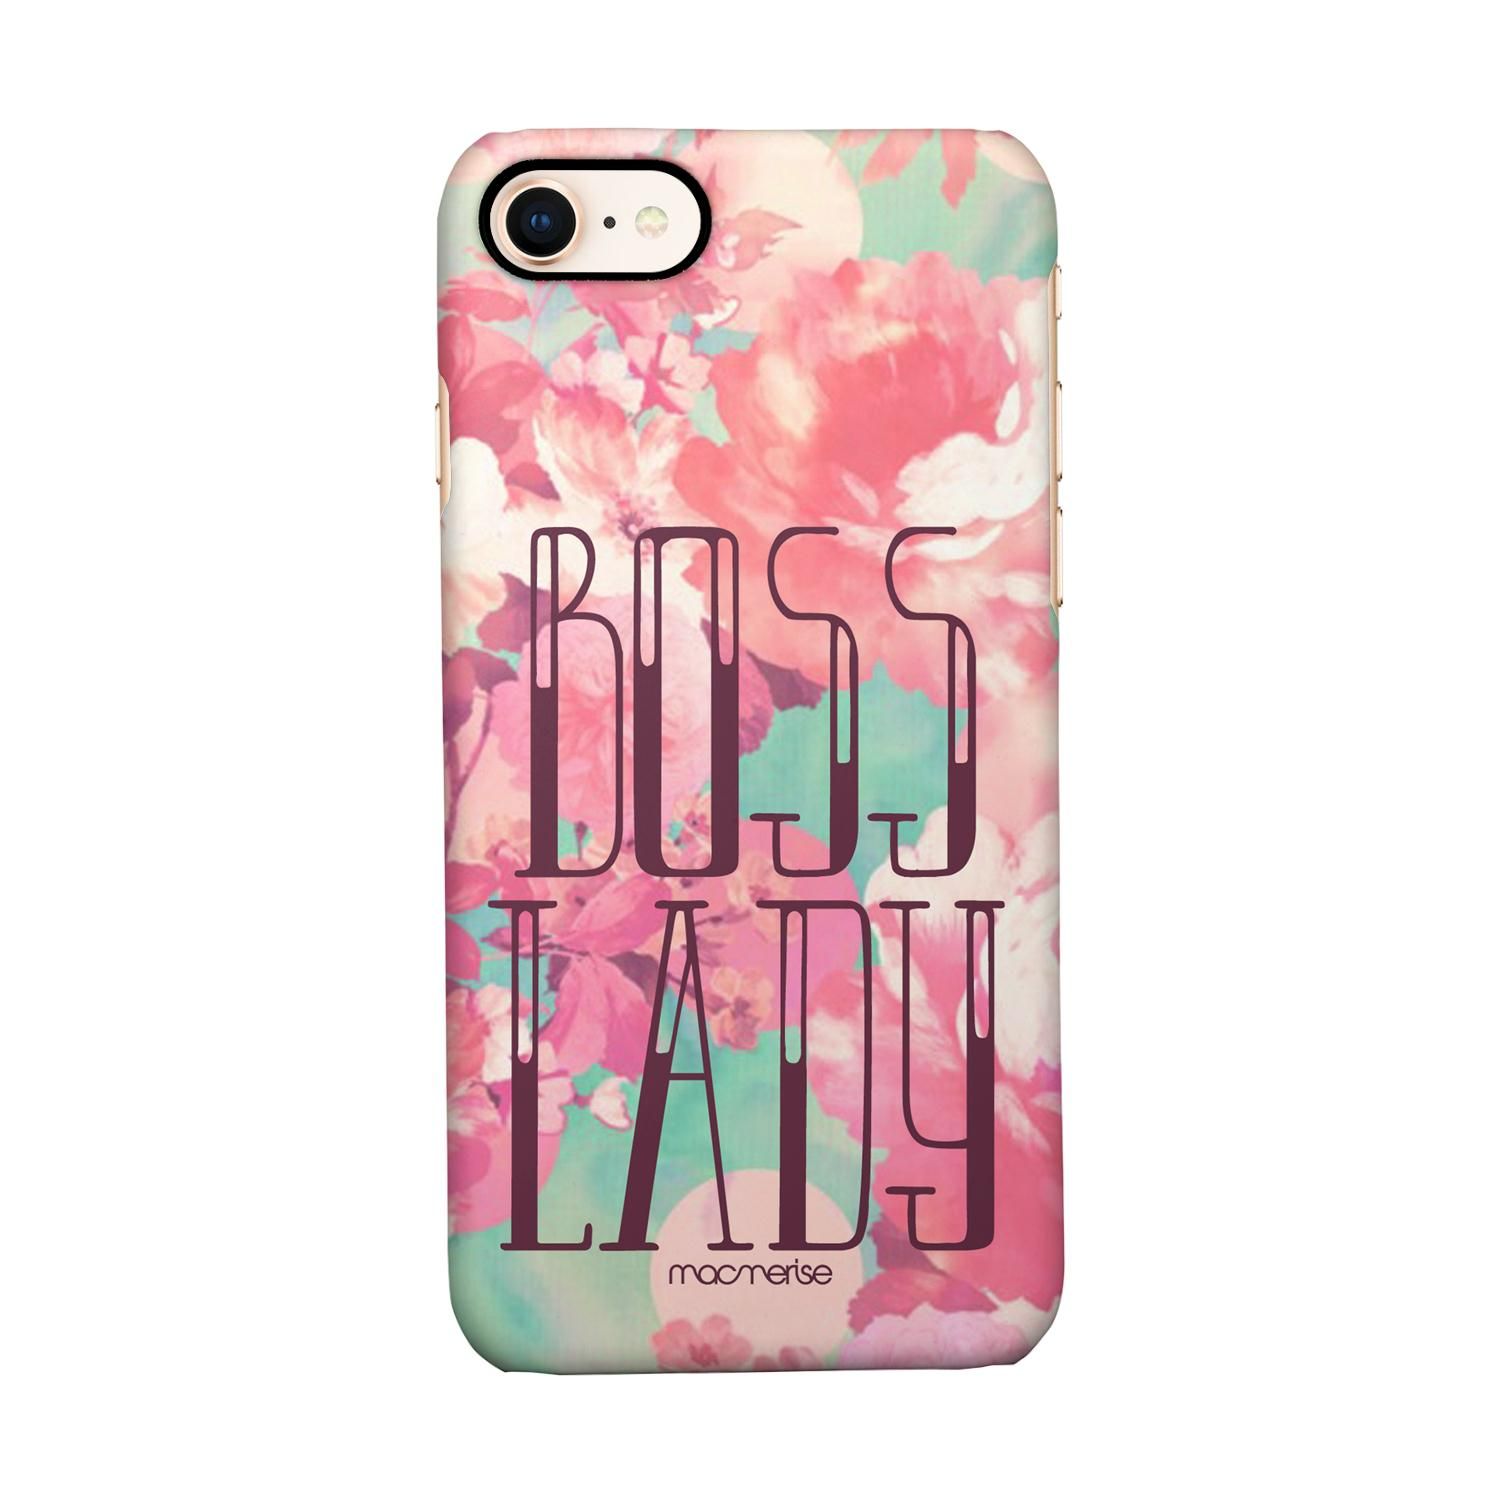 Buy Boss Lady - Sleek Phone Case for iPhone 8 Online